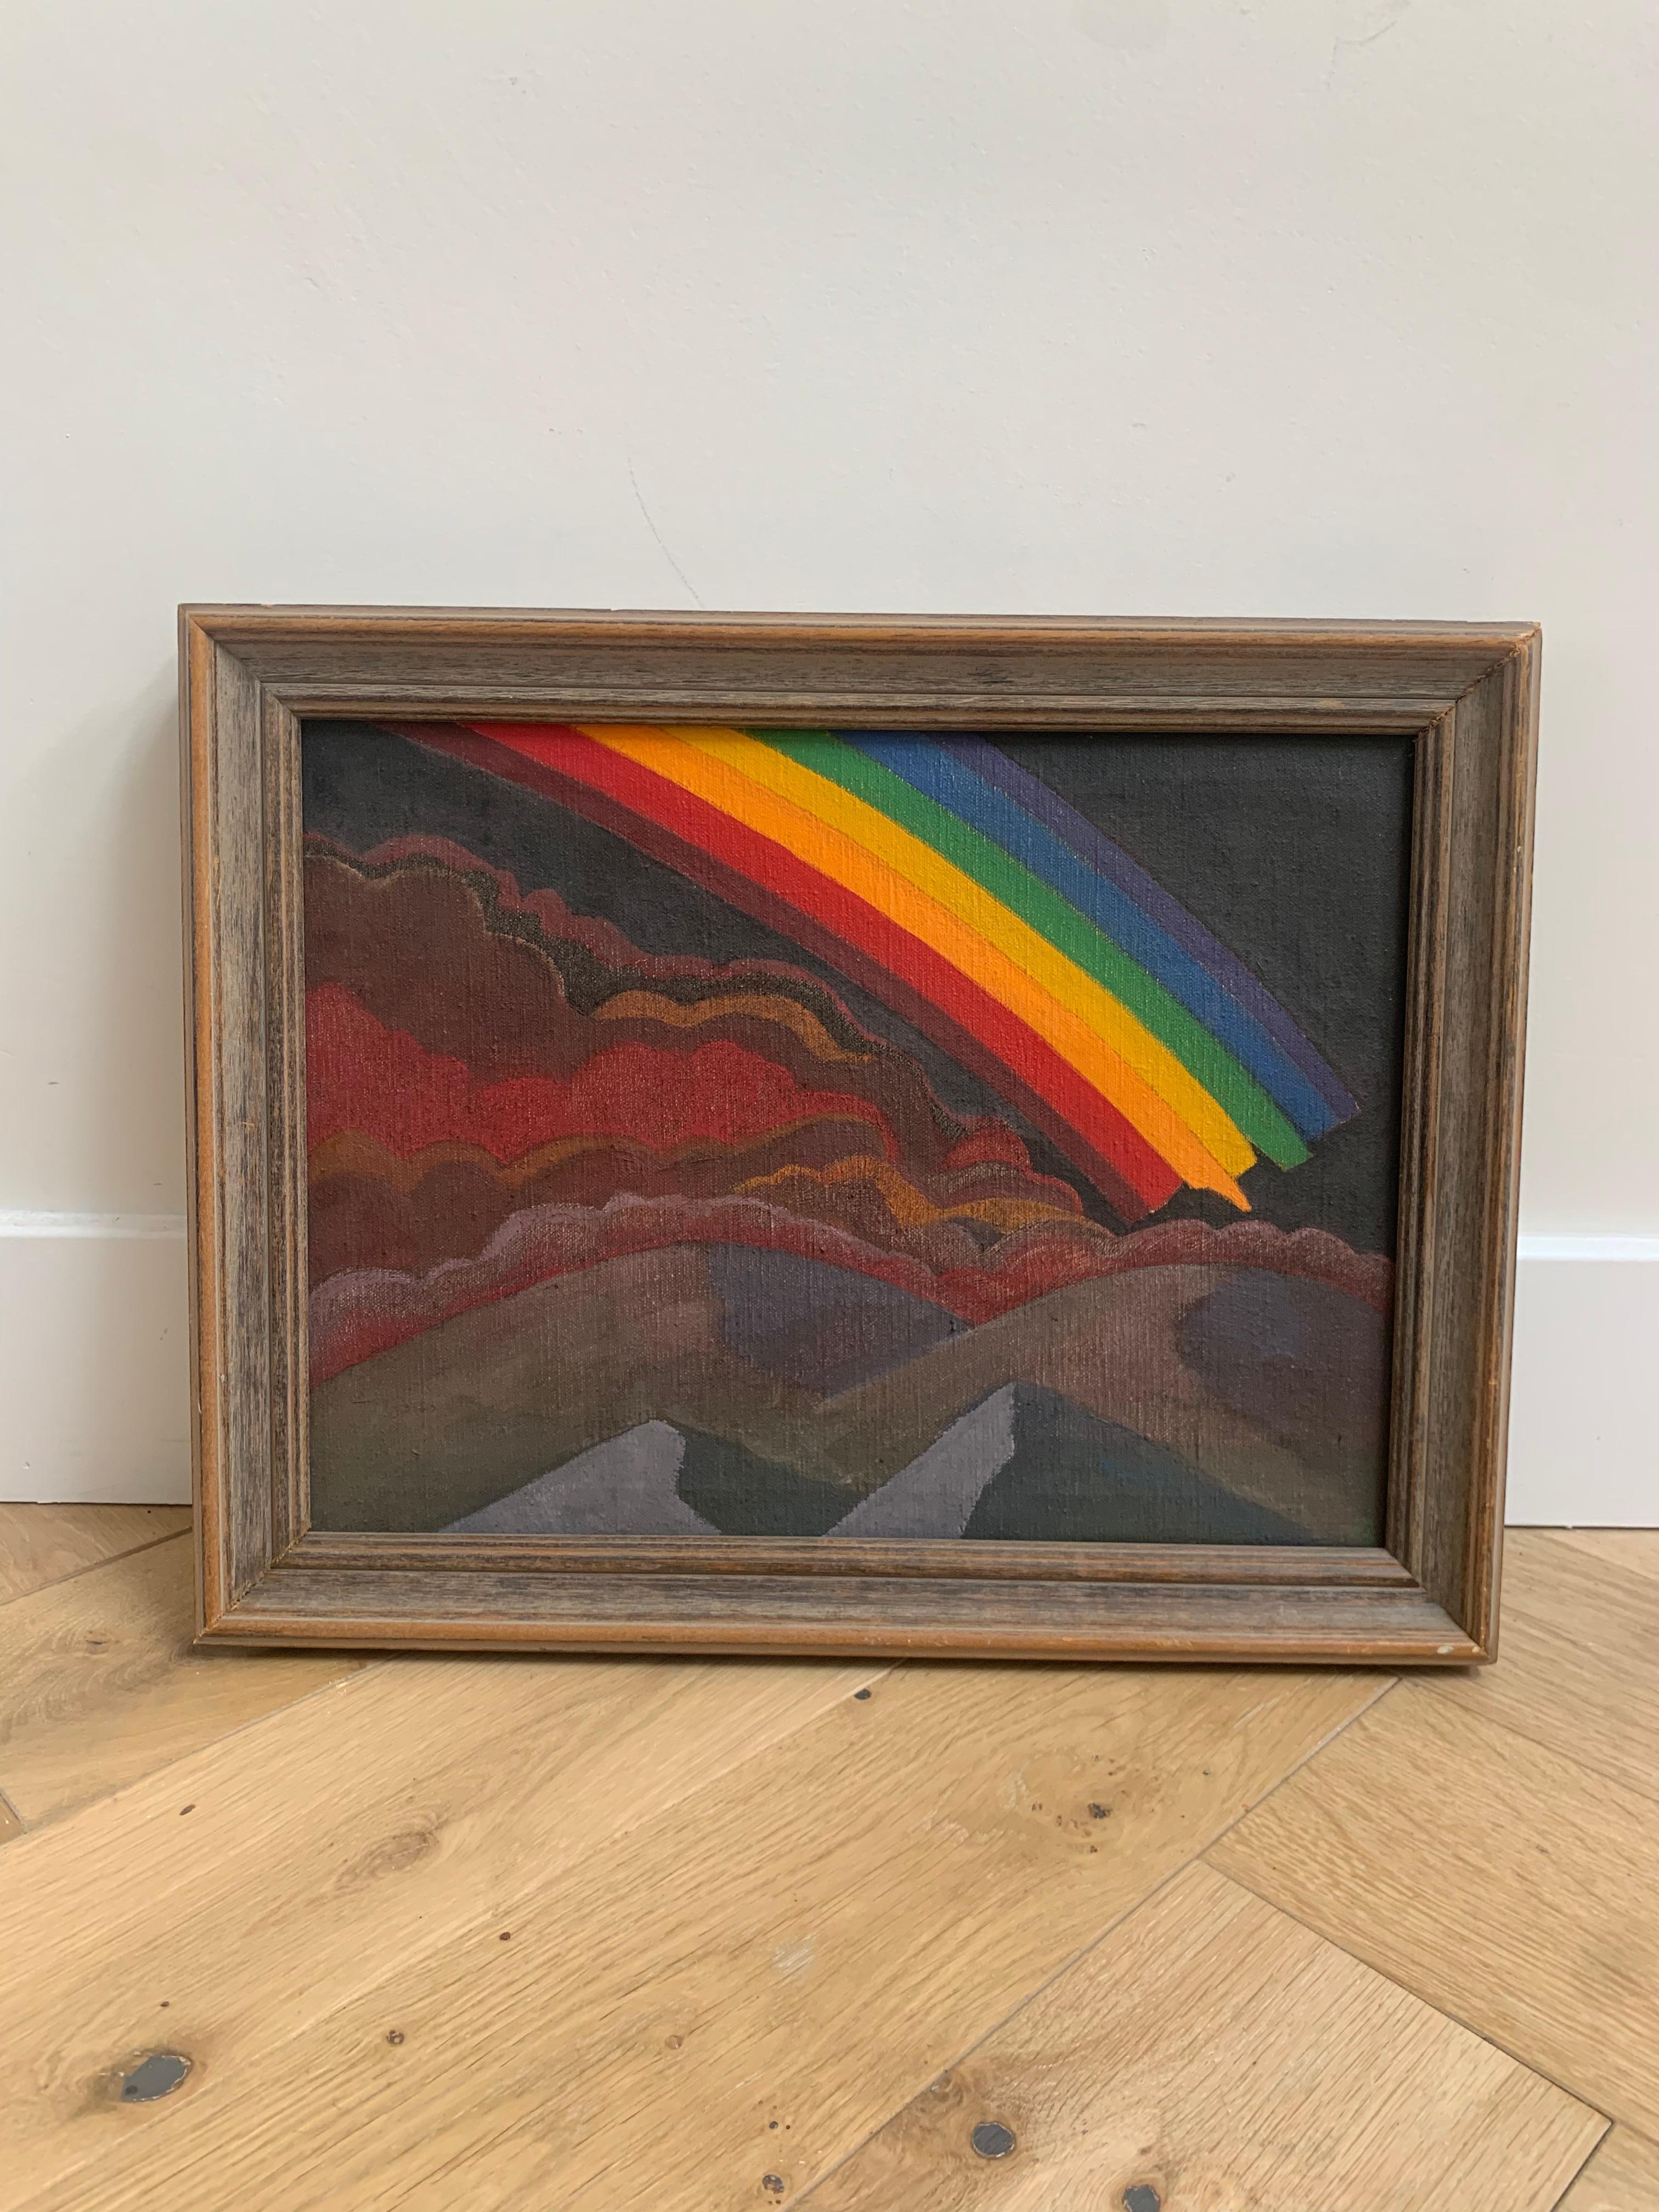 Canvas Ed Beardsley Painting “Midnight Rainbow”, 1980, Signed and Framed